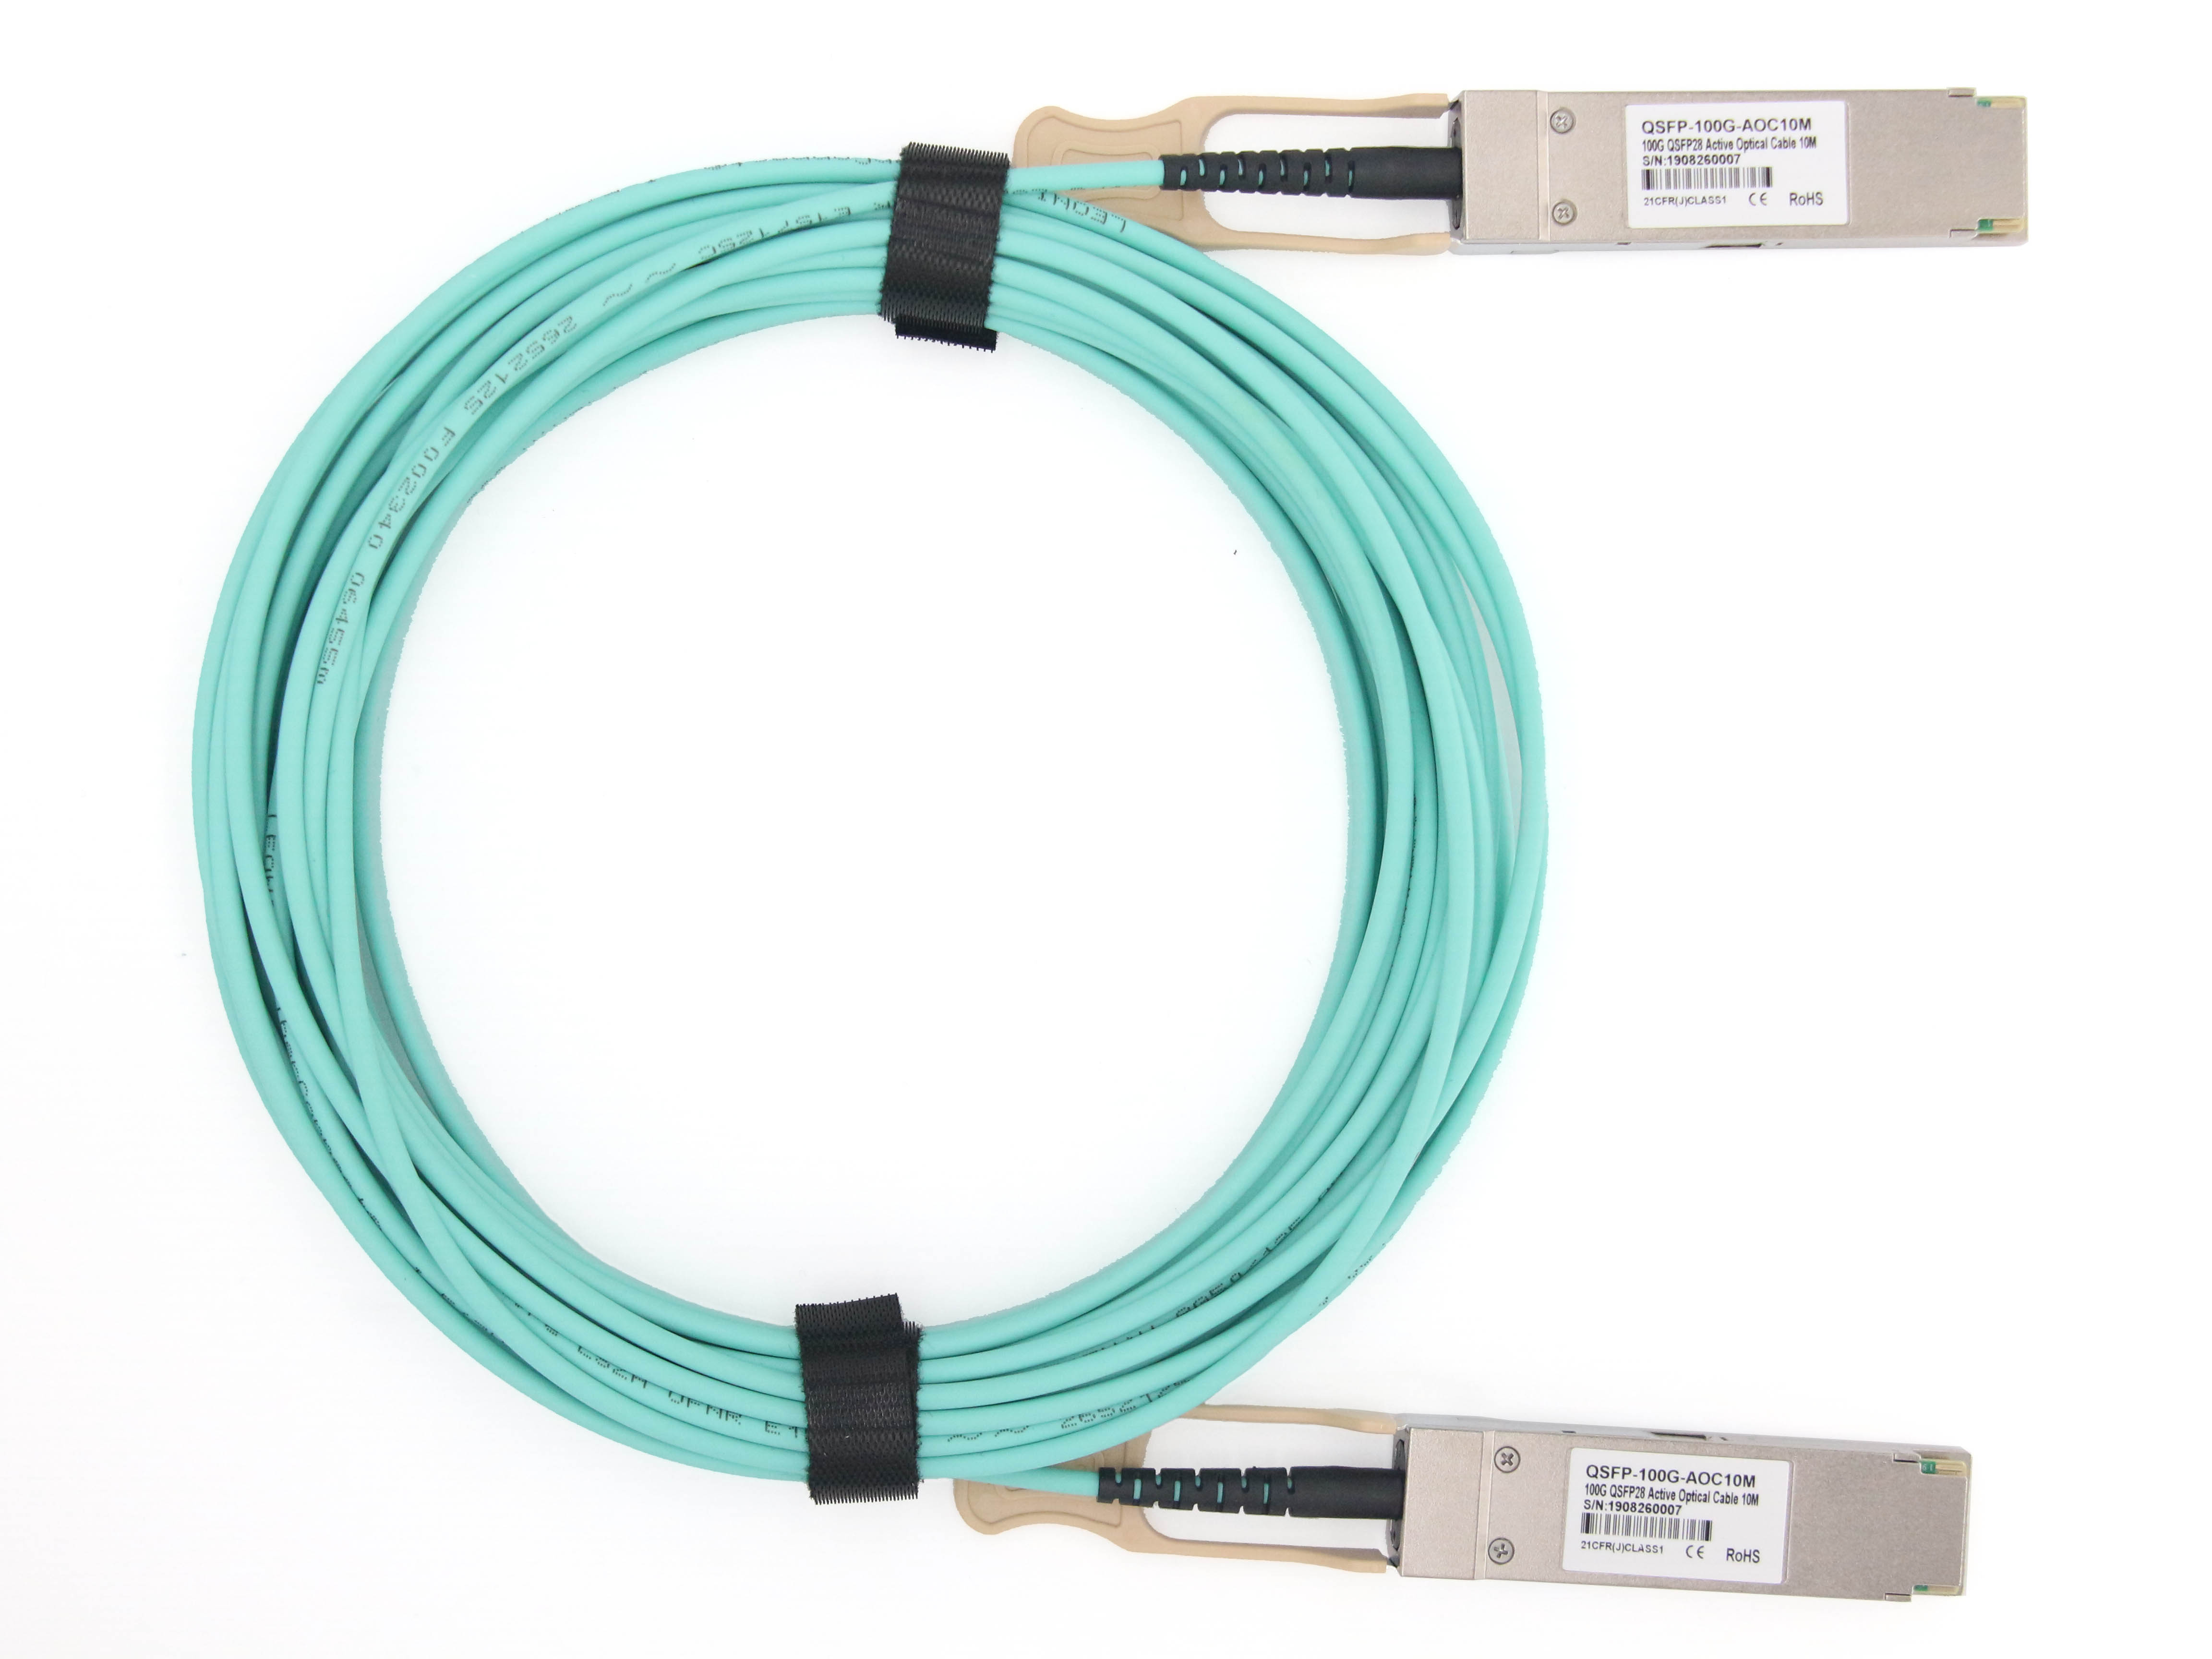 QSFP-100G-AOC 10M有源光缆